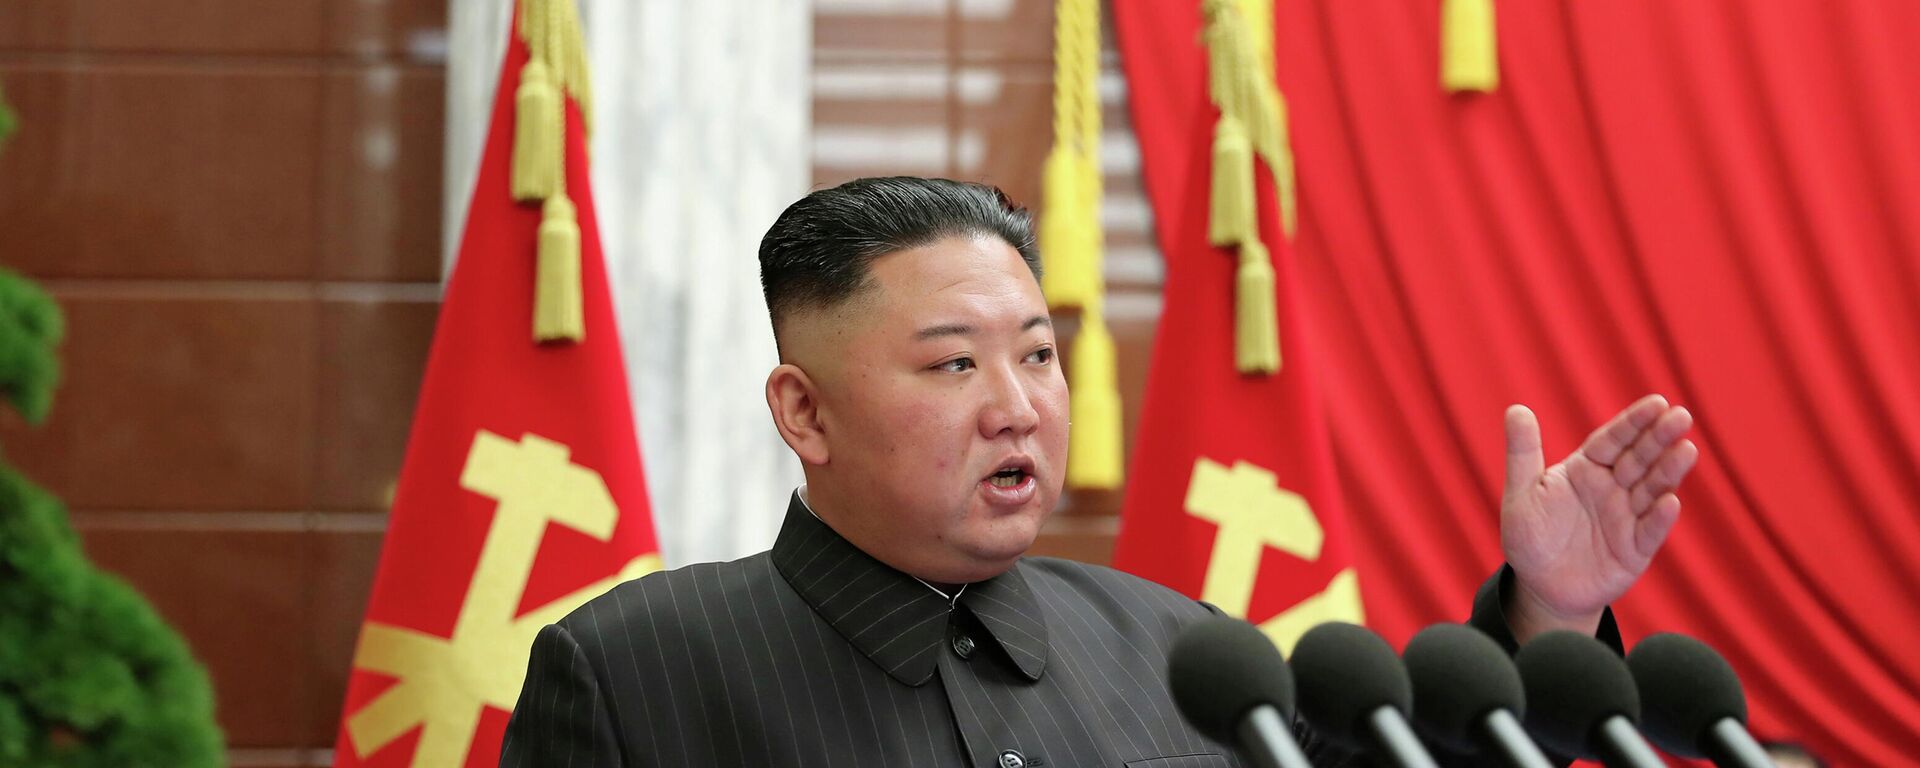 Kim Jong-un, líder de Corea del Norte - Sputnik Mundo, 1920, 08.07.2021